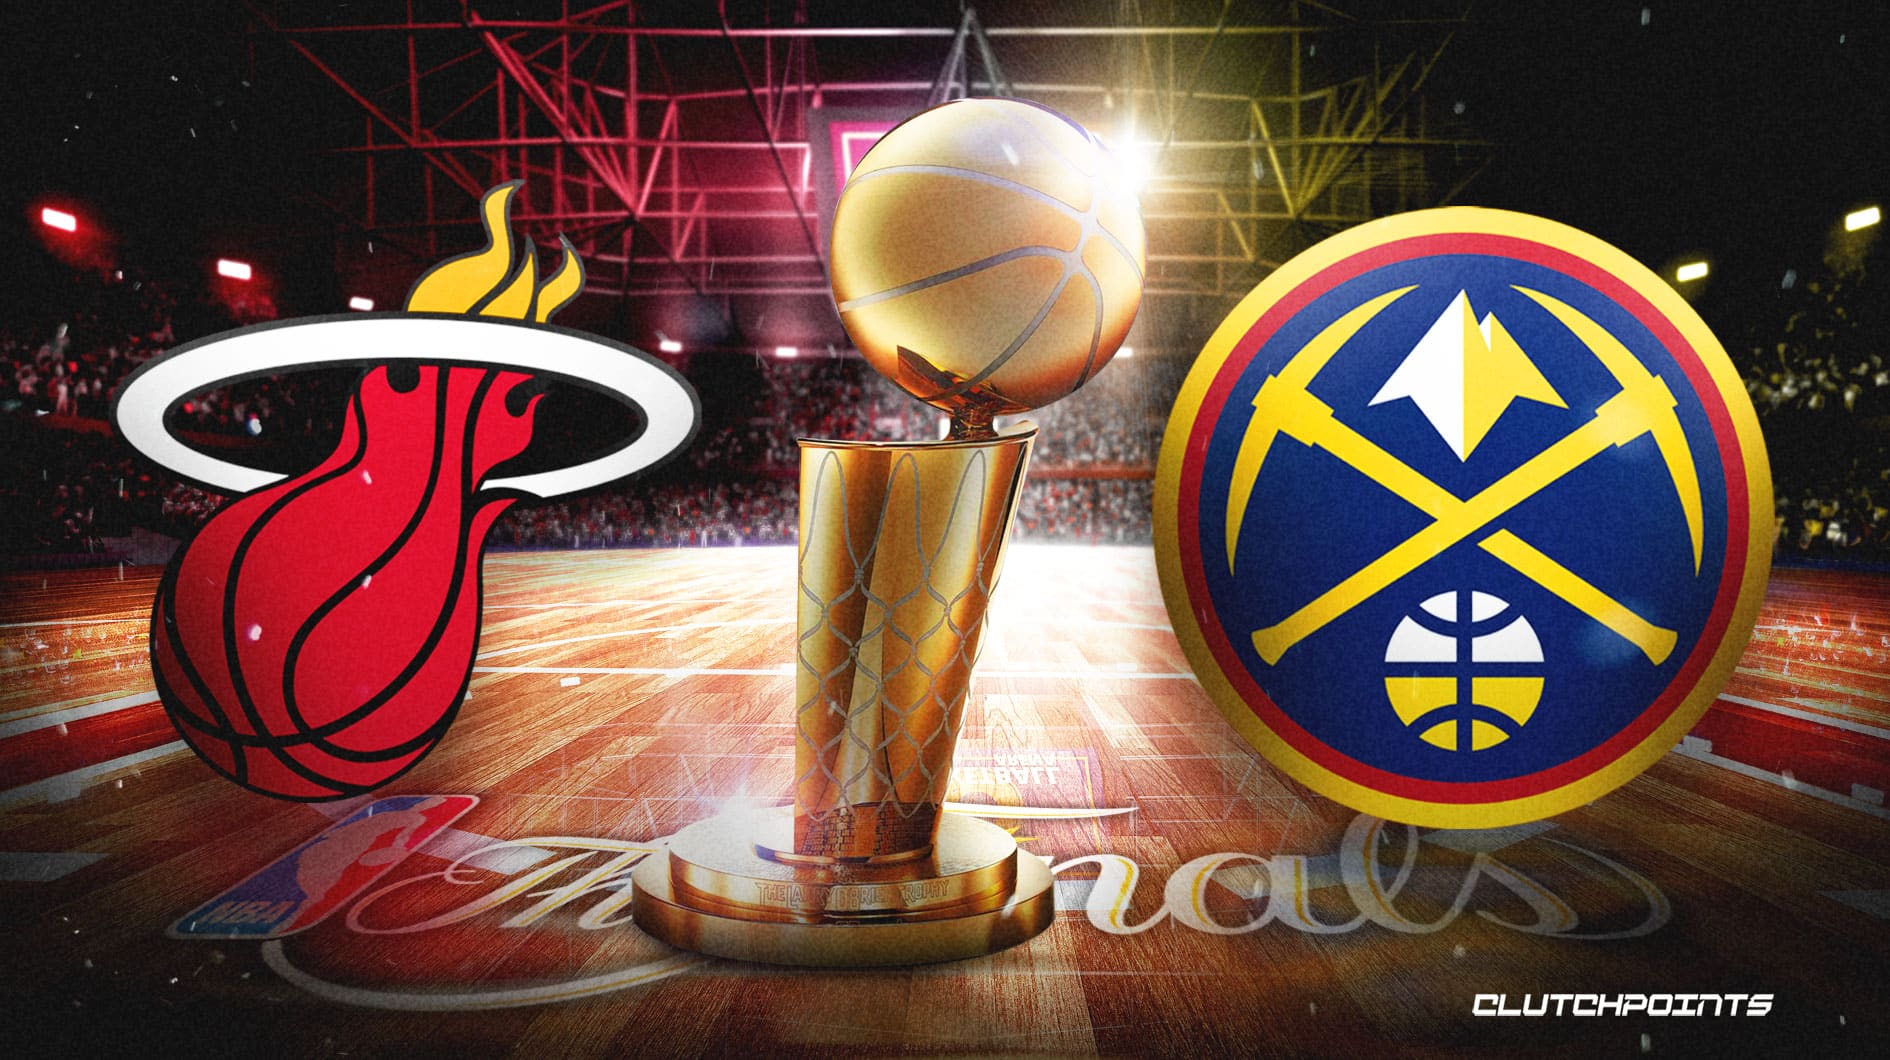 Denver Nuggets vs Miami Heat free live stream, Game 1 score, NBA Finals  schedule (6/1/2023) 